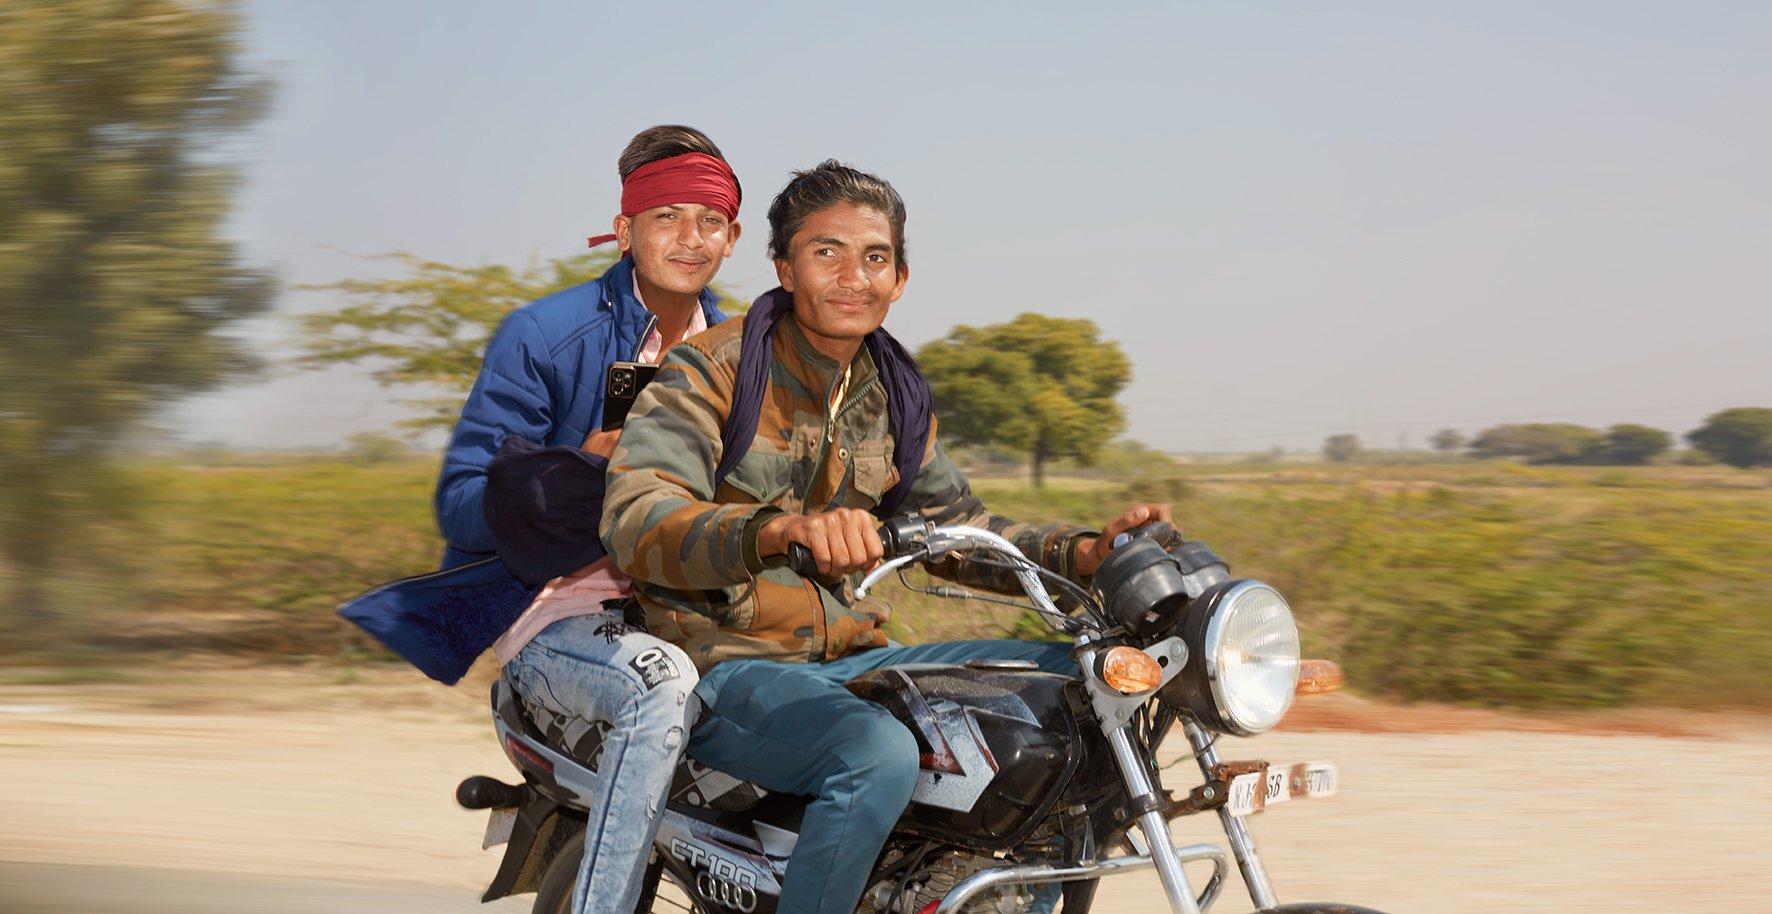 Highway Heroes / India